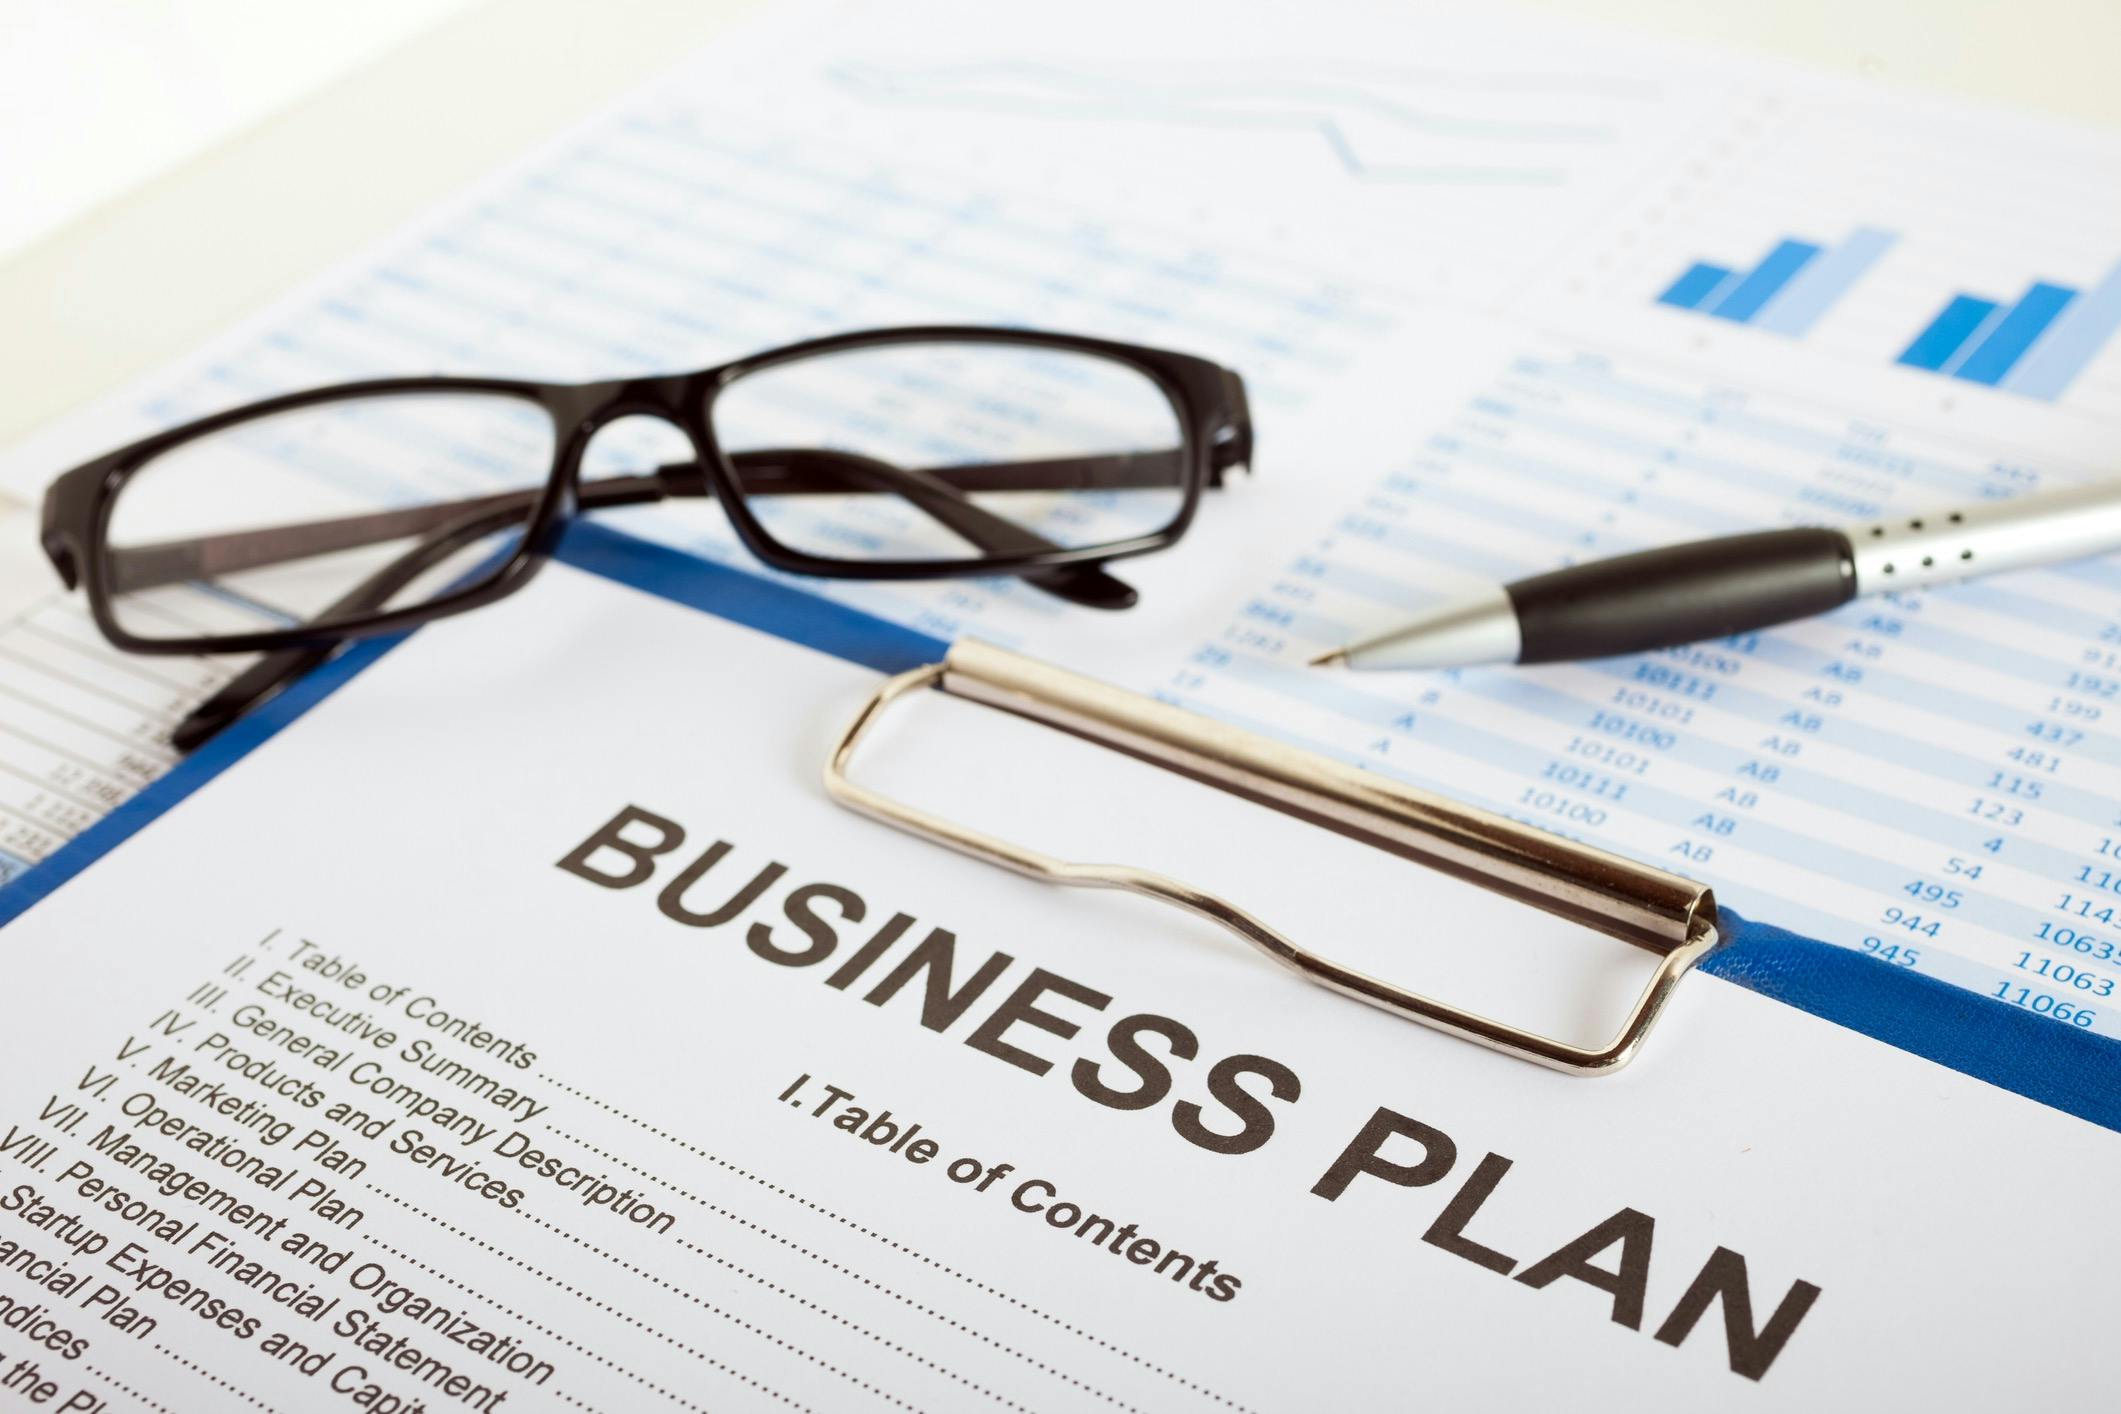 business plan template